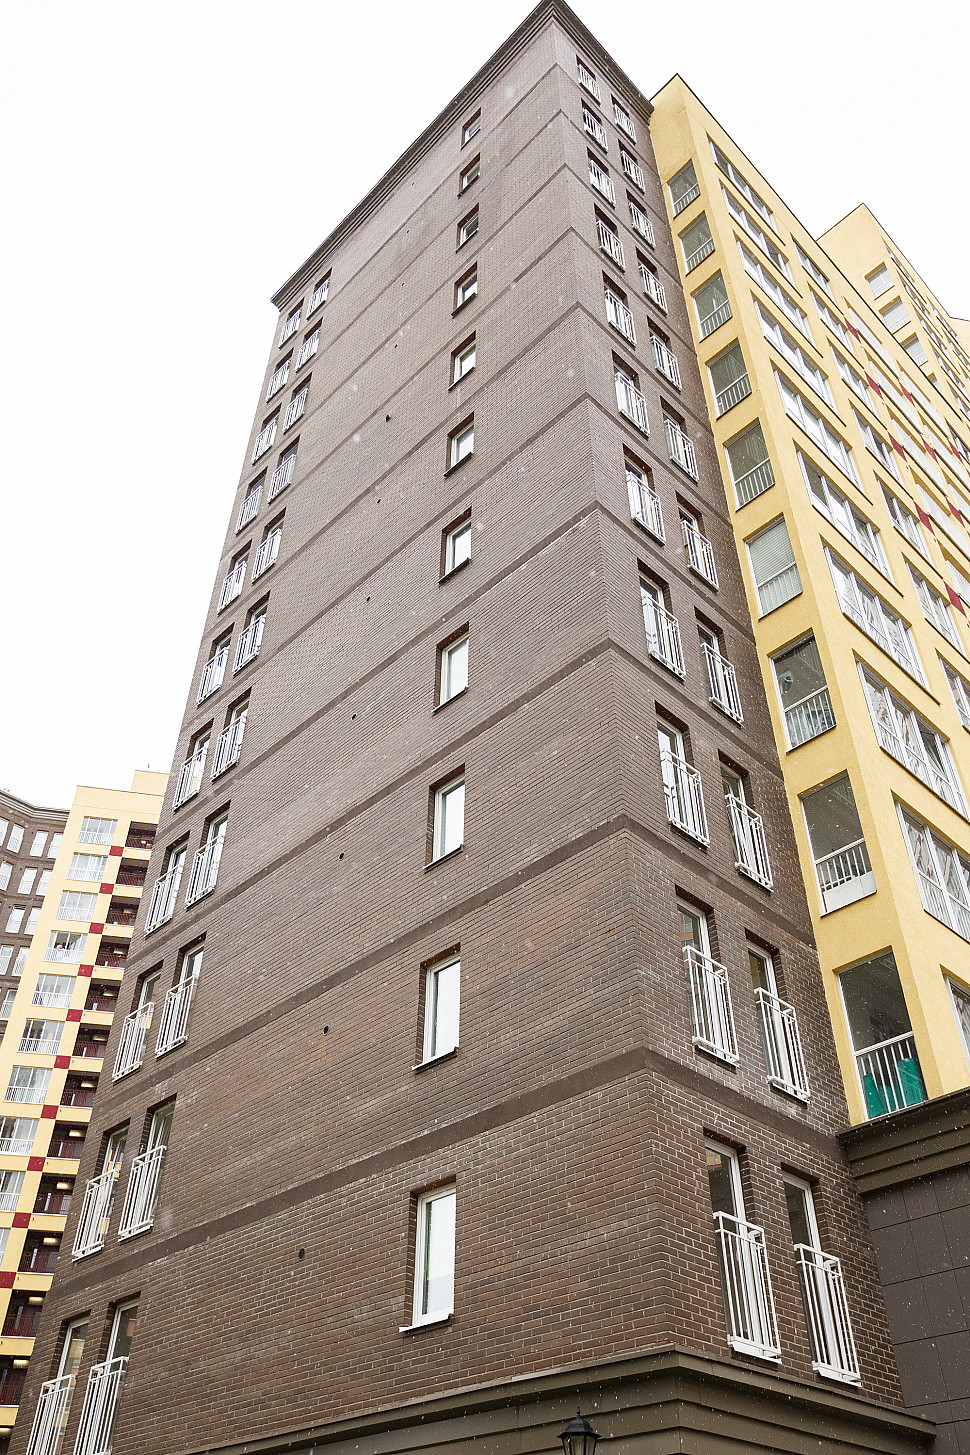 Фасады домов из кирпича темно-коричневого производства ЛСР